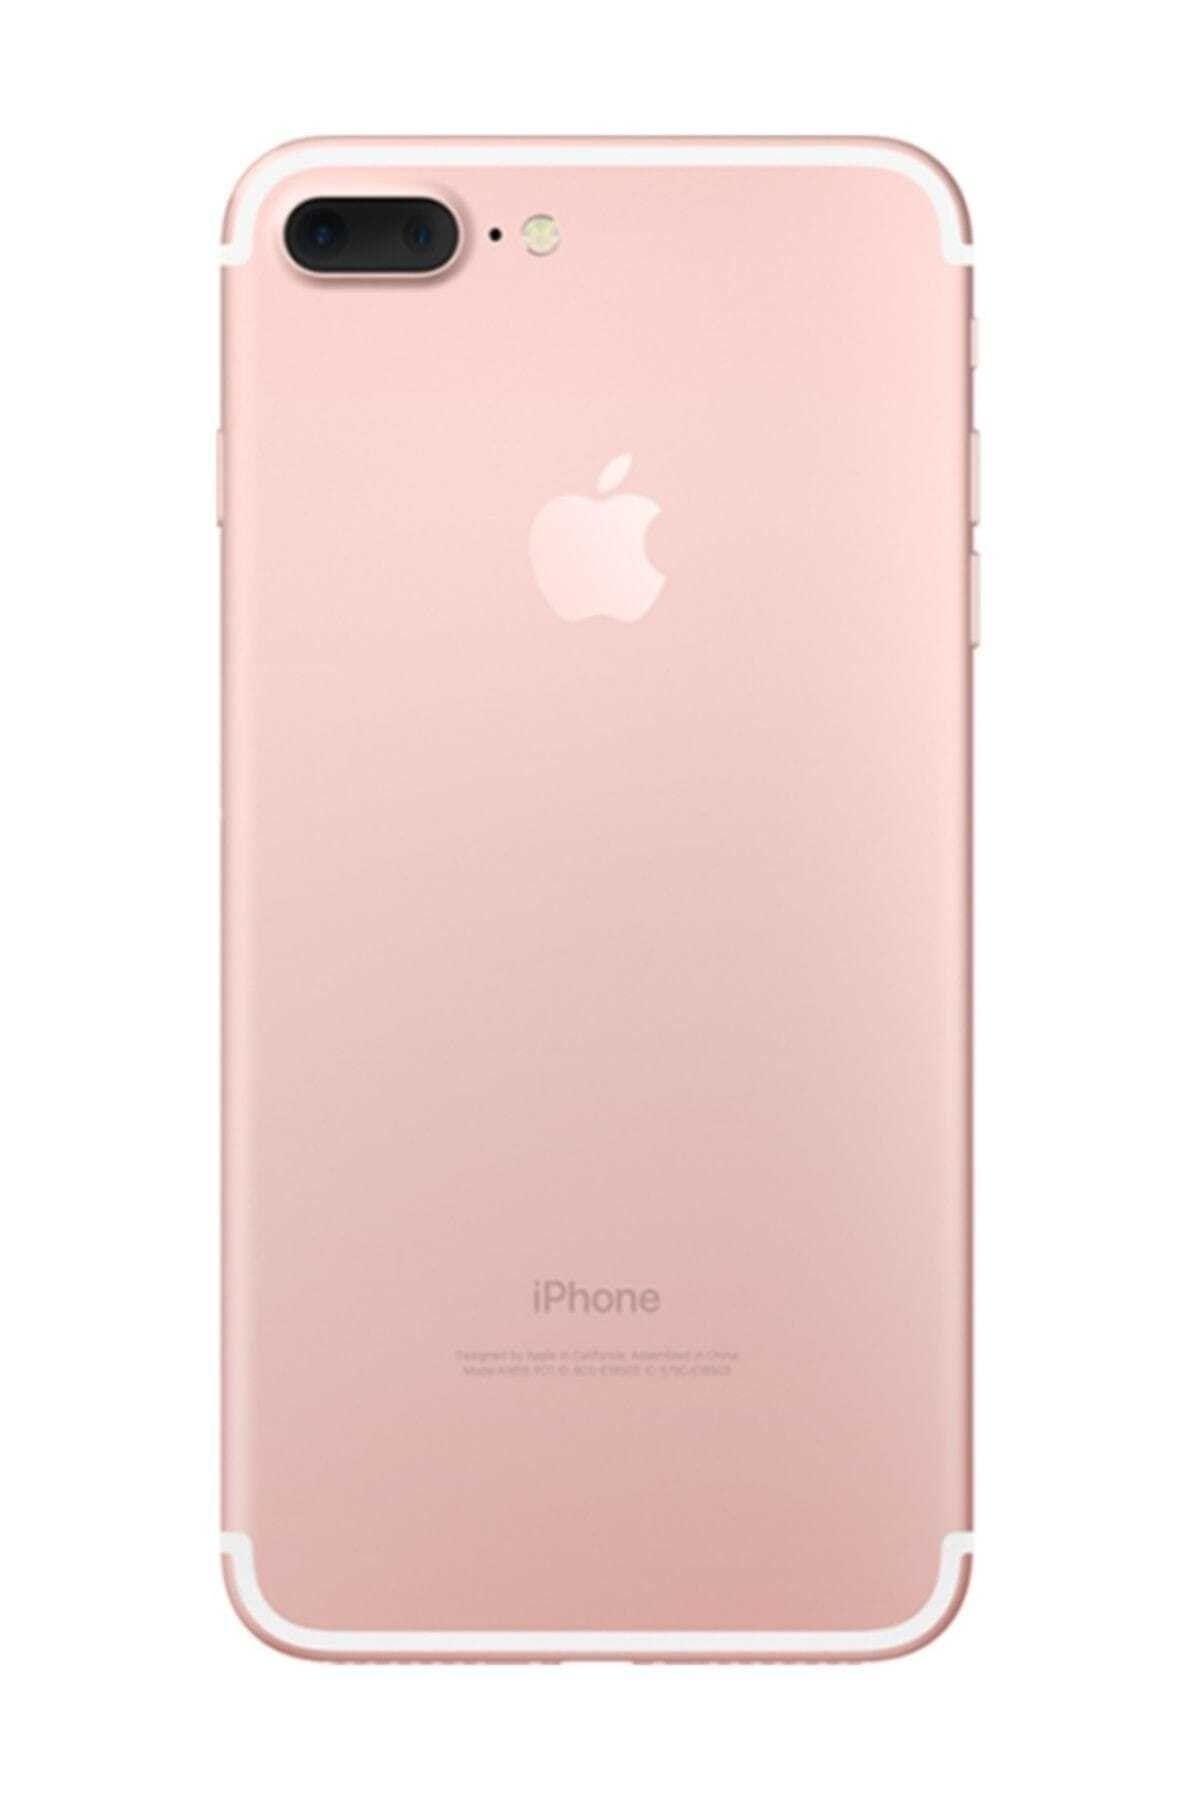 Apple Yenilenmiş iPhone 7 Plus 32 GB Rose Gold (12 Ay Garantili) B Grade Uyumlu